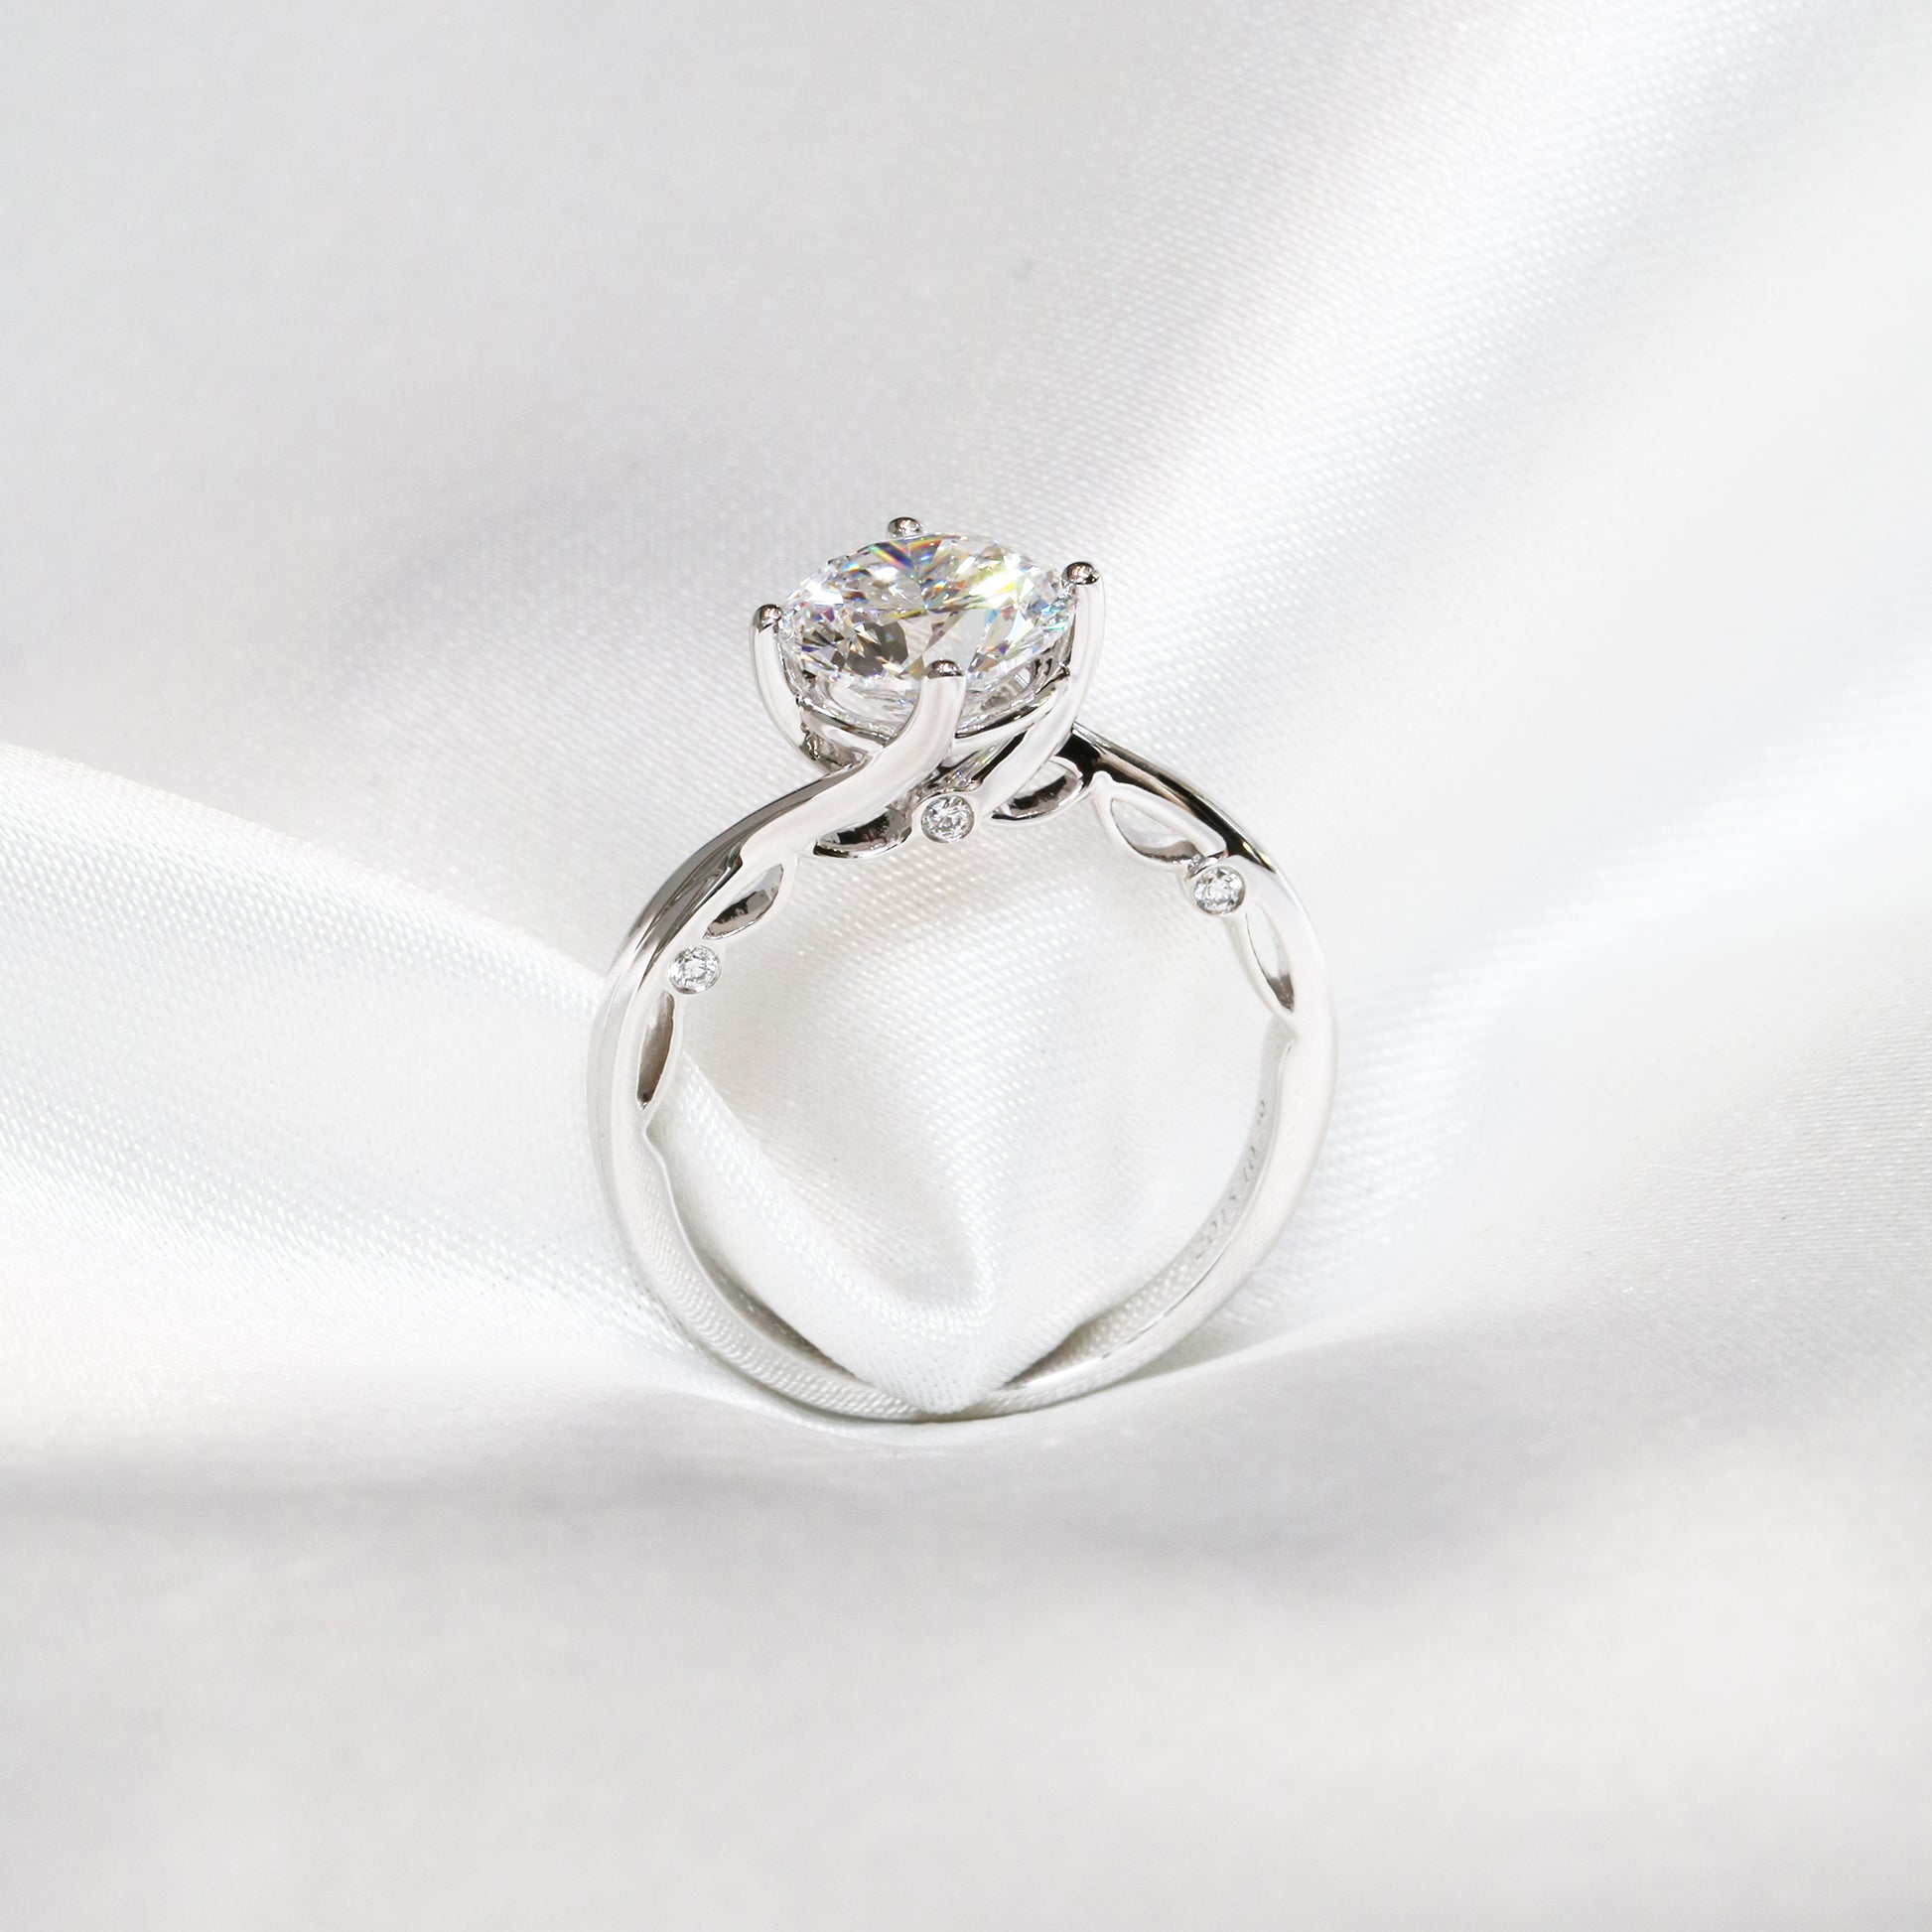 Forsythia Vintage 18k White Gold 4-Prong Diamond Engagement Ring Setting 18k白金四爪通花線條蕾絲花紋求婚鑽石戒指款式